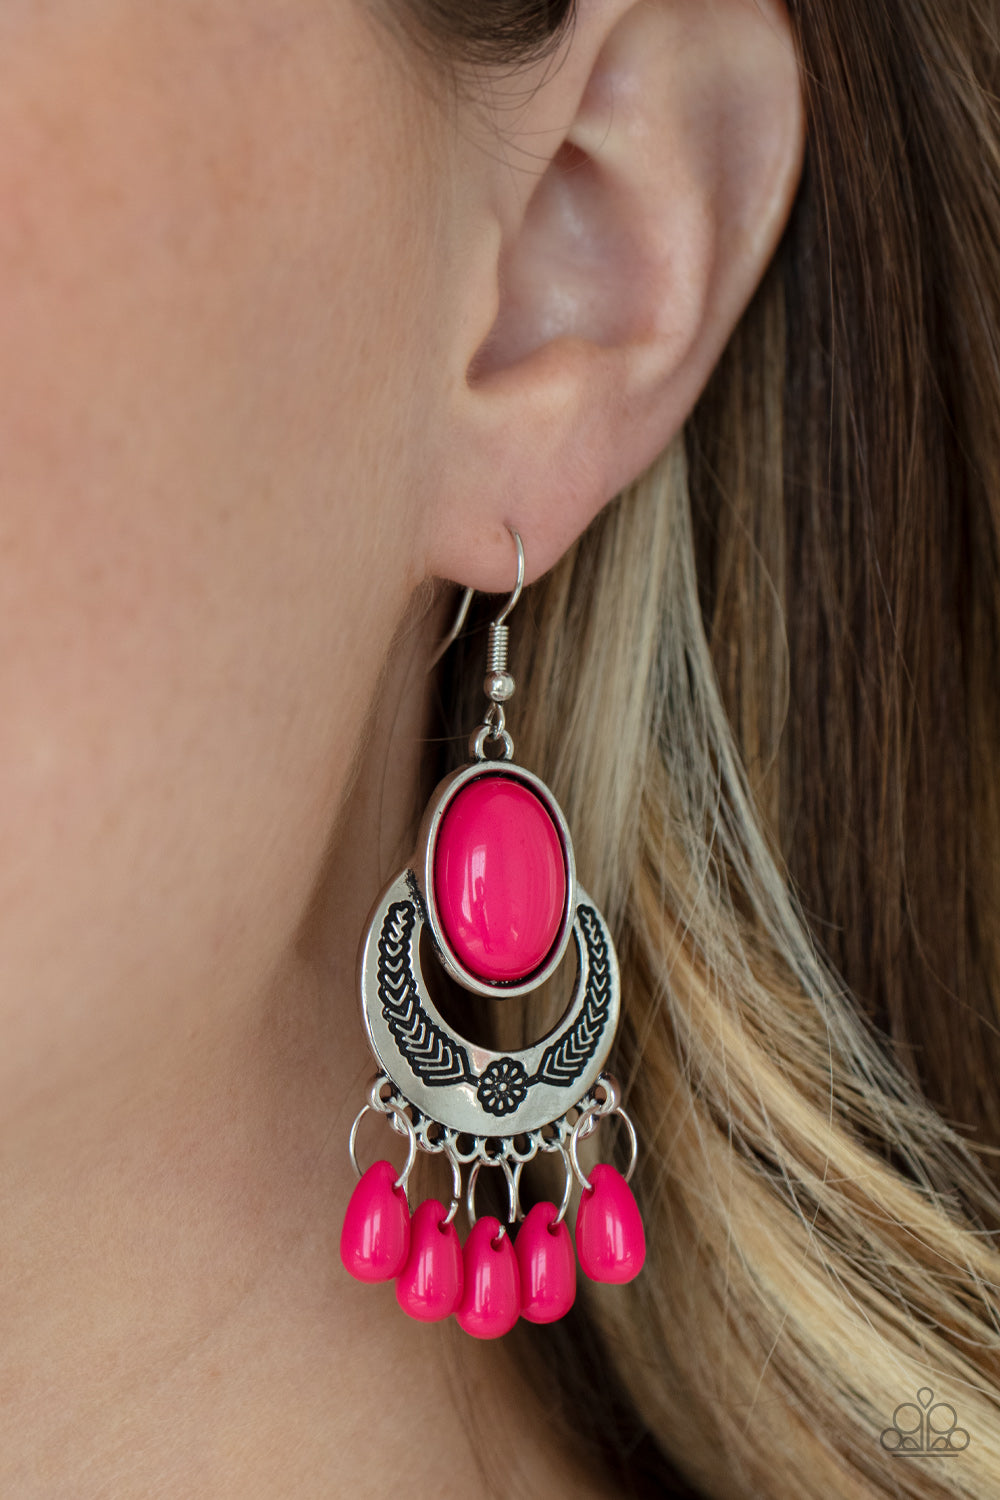 Prairie Flirt - Pink Earrings - Princess Glam Shop